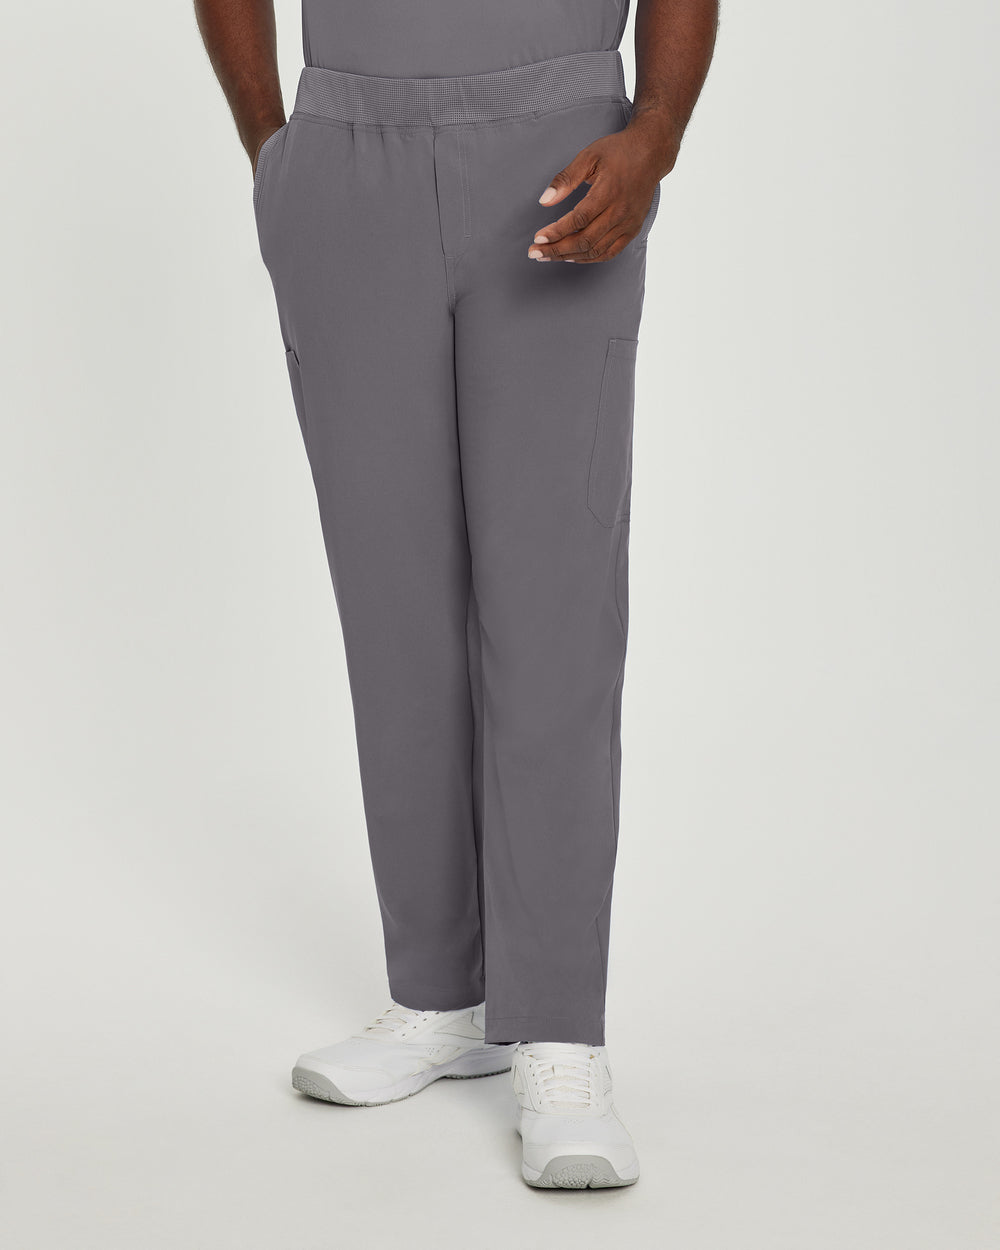 Men's straight pants - FIT - 229T tall